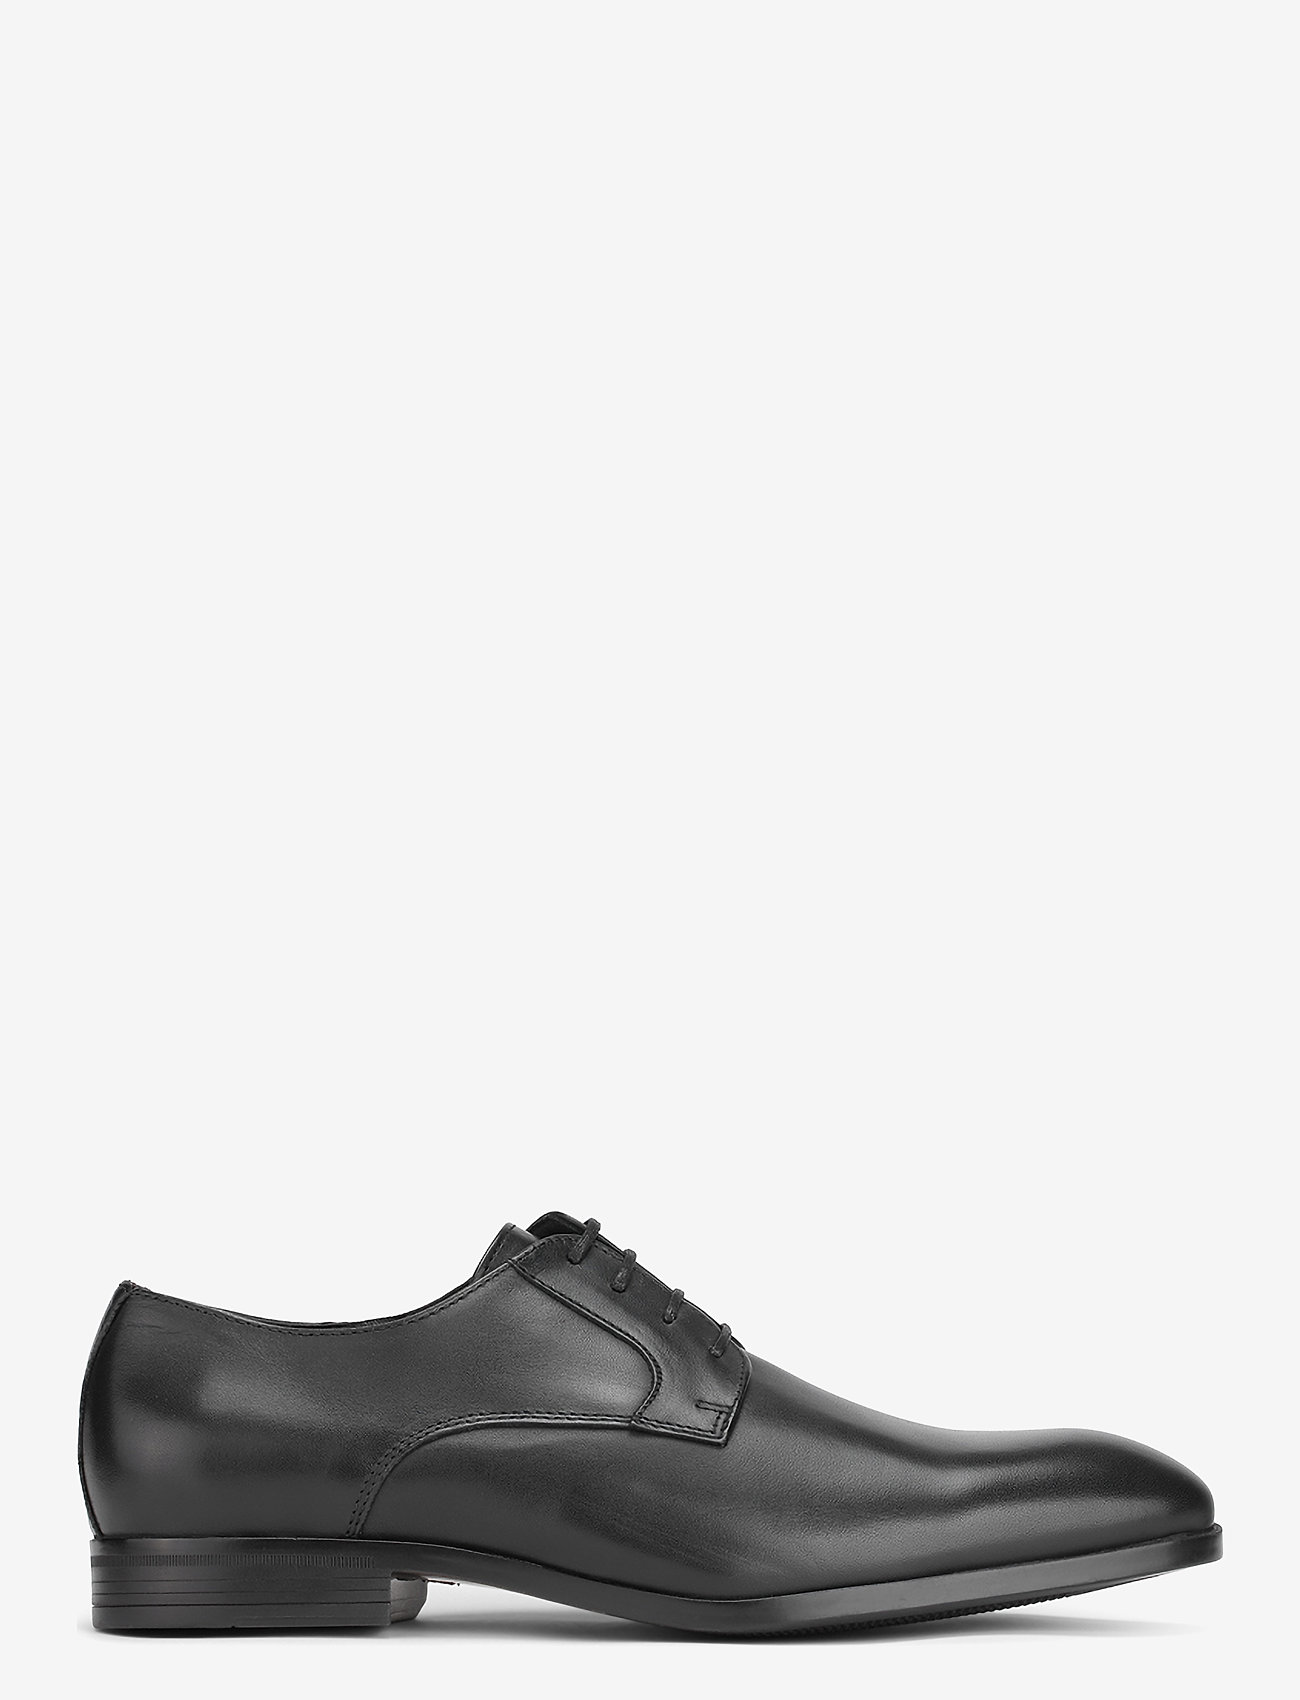 Playboy Footwear - PB10048 - schnürschuhe - black leather - 1